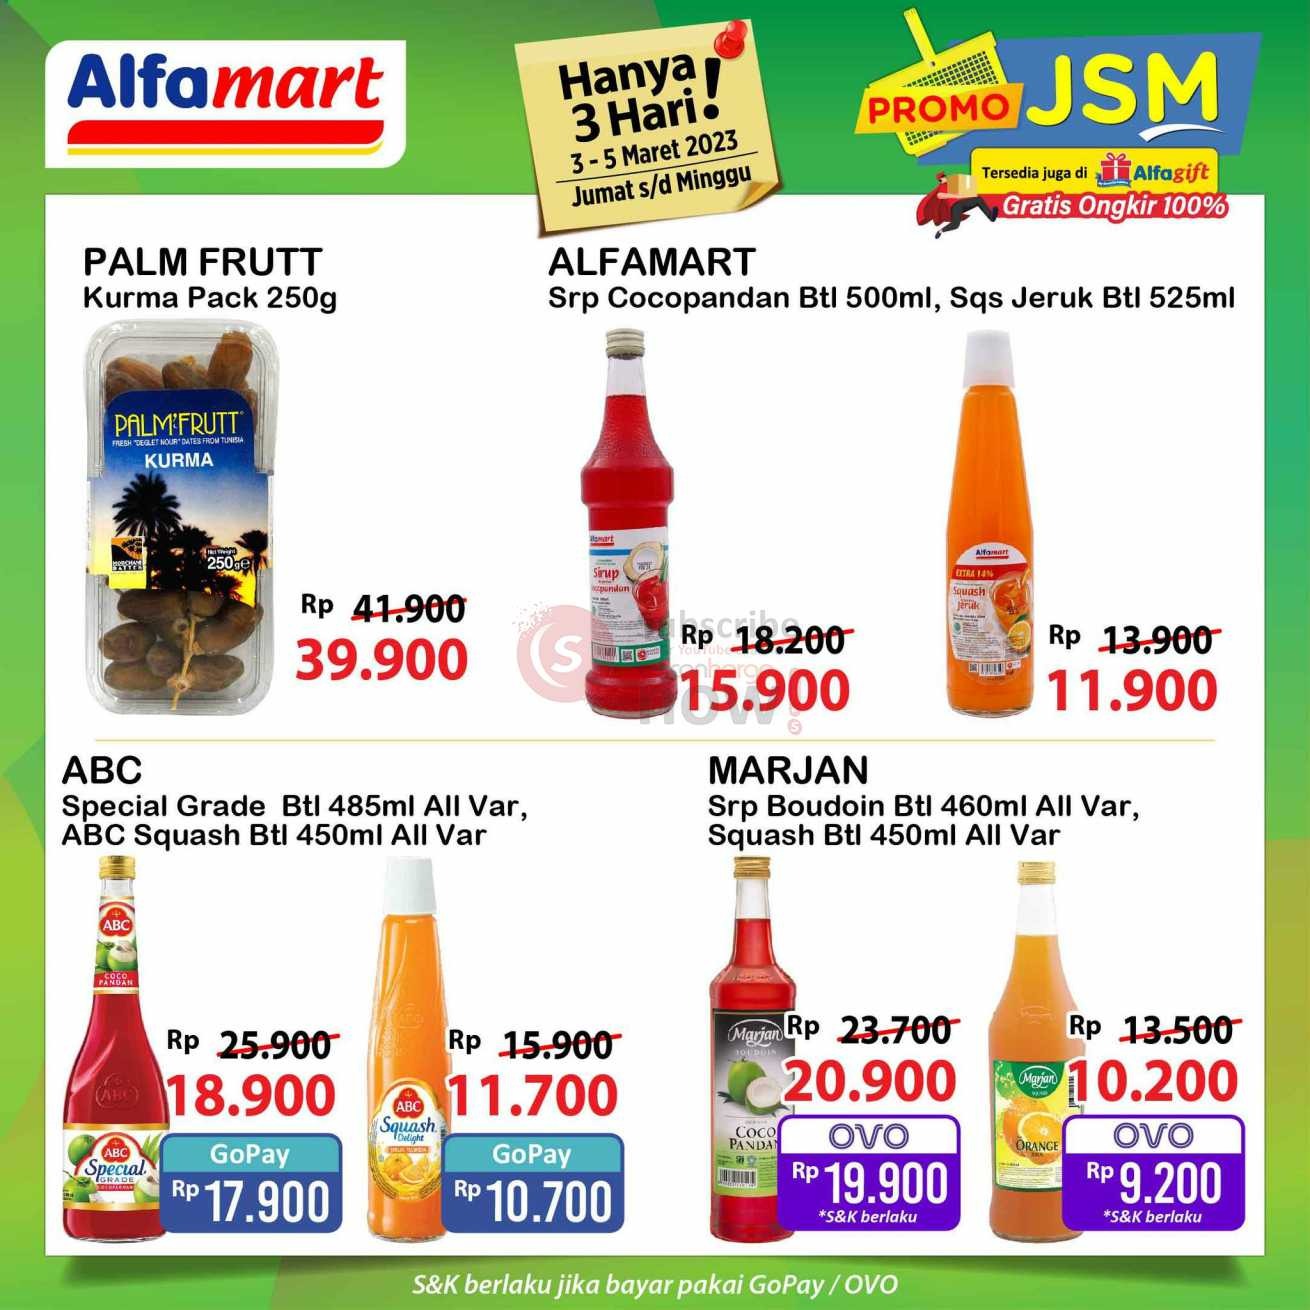 Katalog Promo JSM Alfamart Terbaru 5 Maret 2023 Marjan Sirup Rp21.200 buat Takjil Menyambut Ramadan